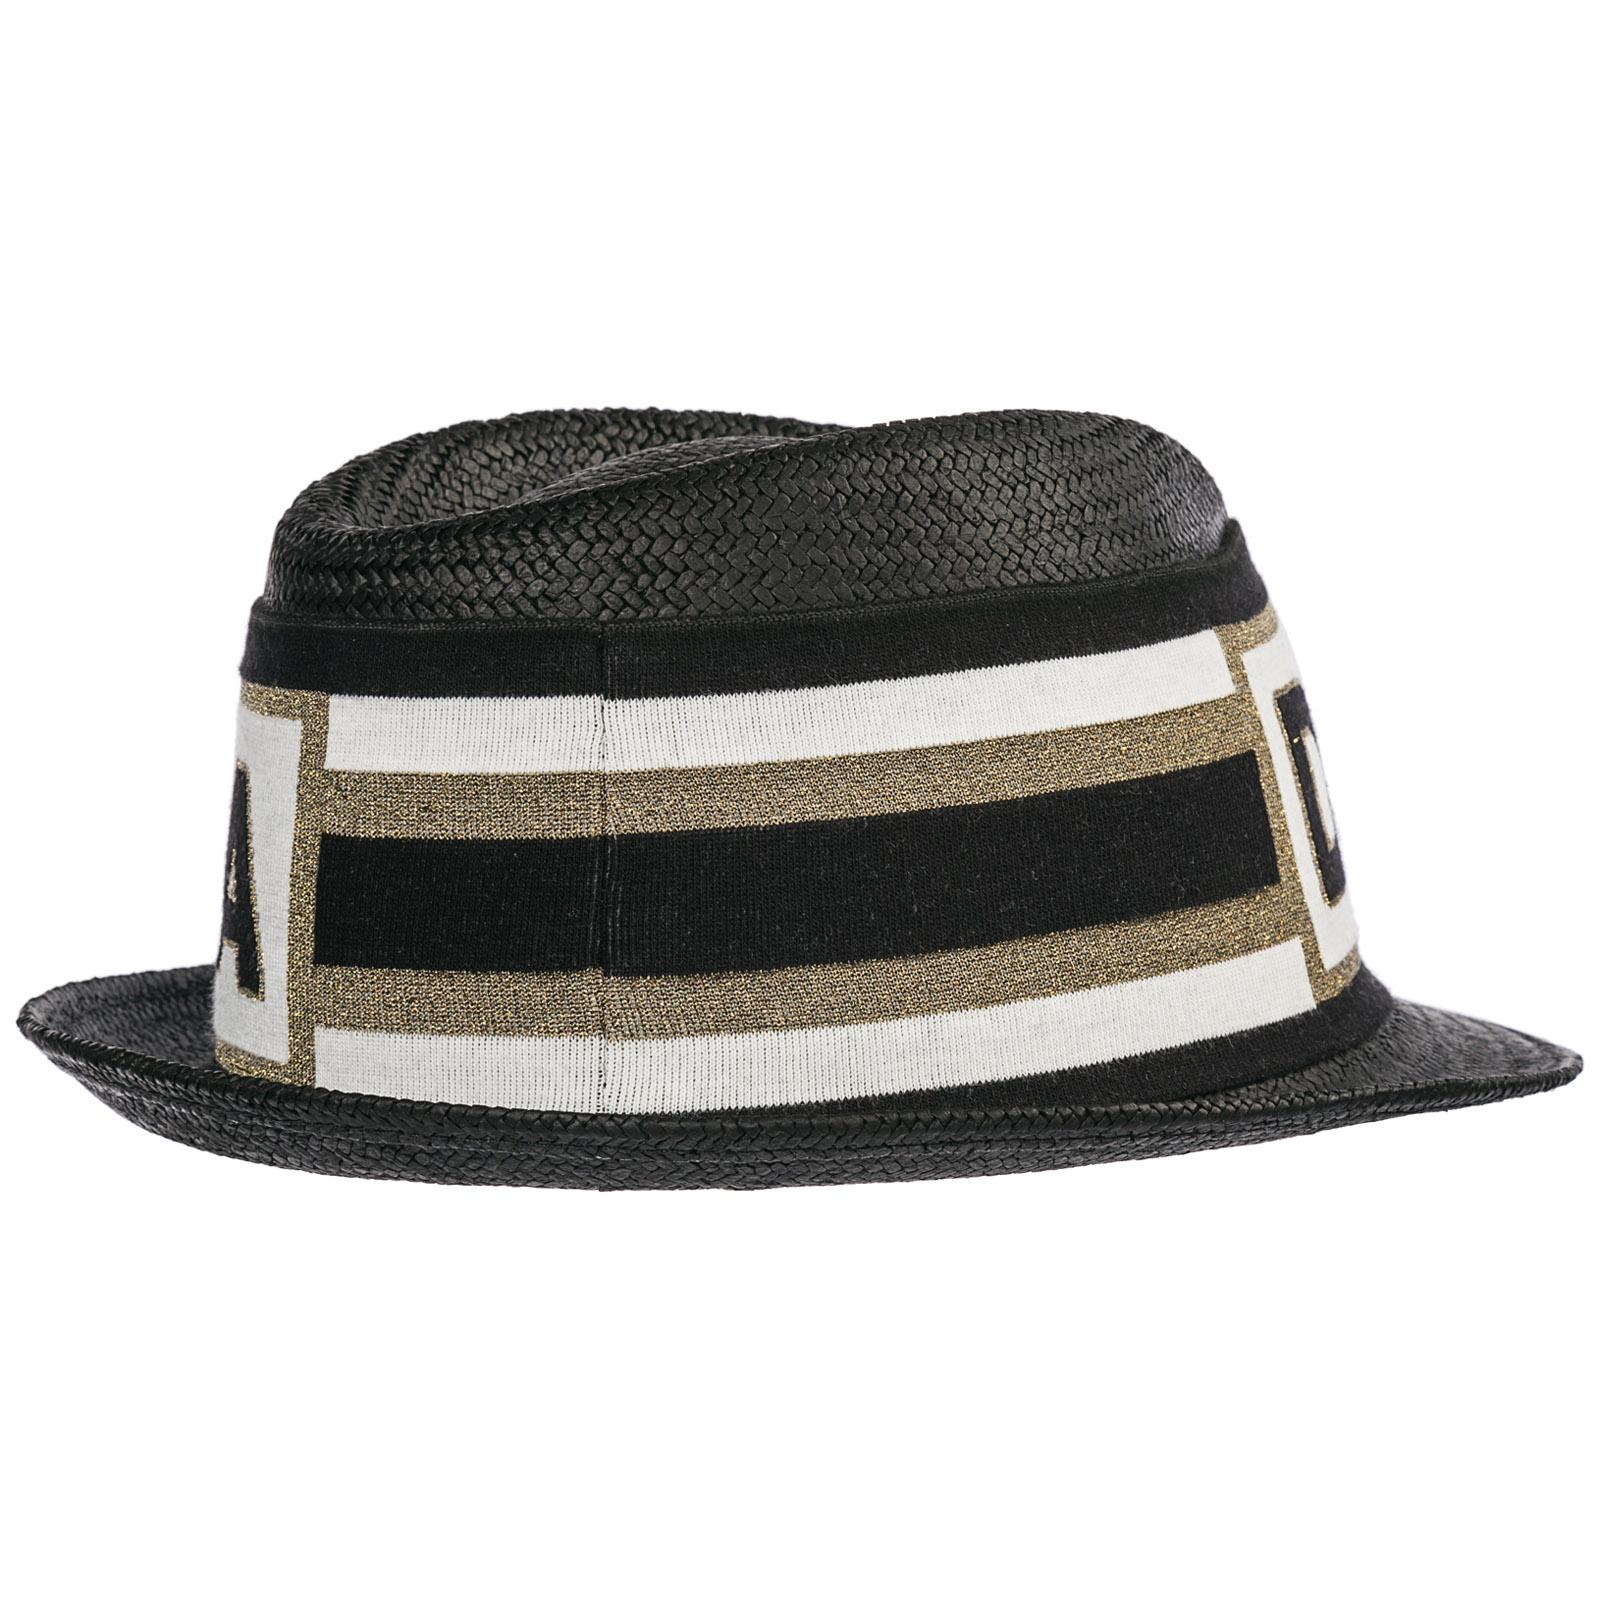 Lyst - Dolce & Gabbana Knit Detail Hat in Black for Men